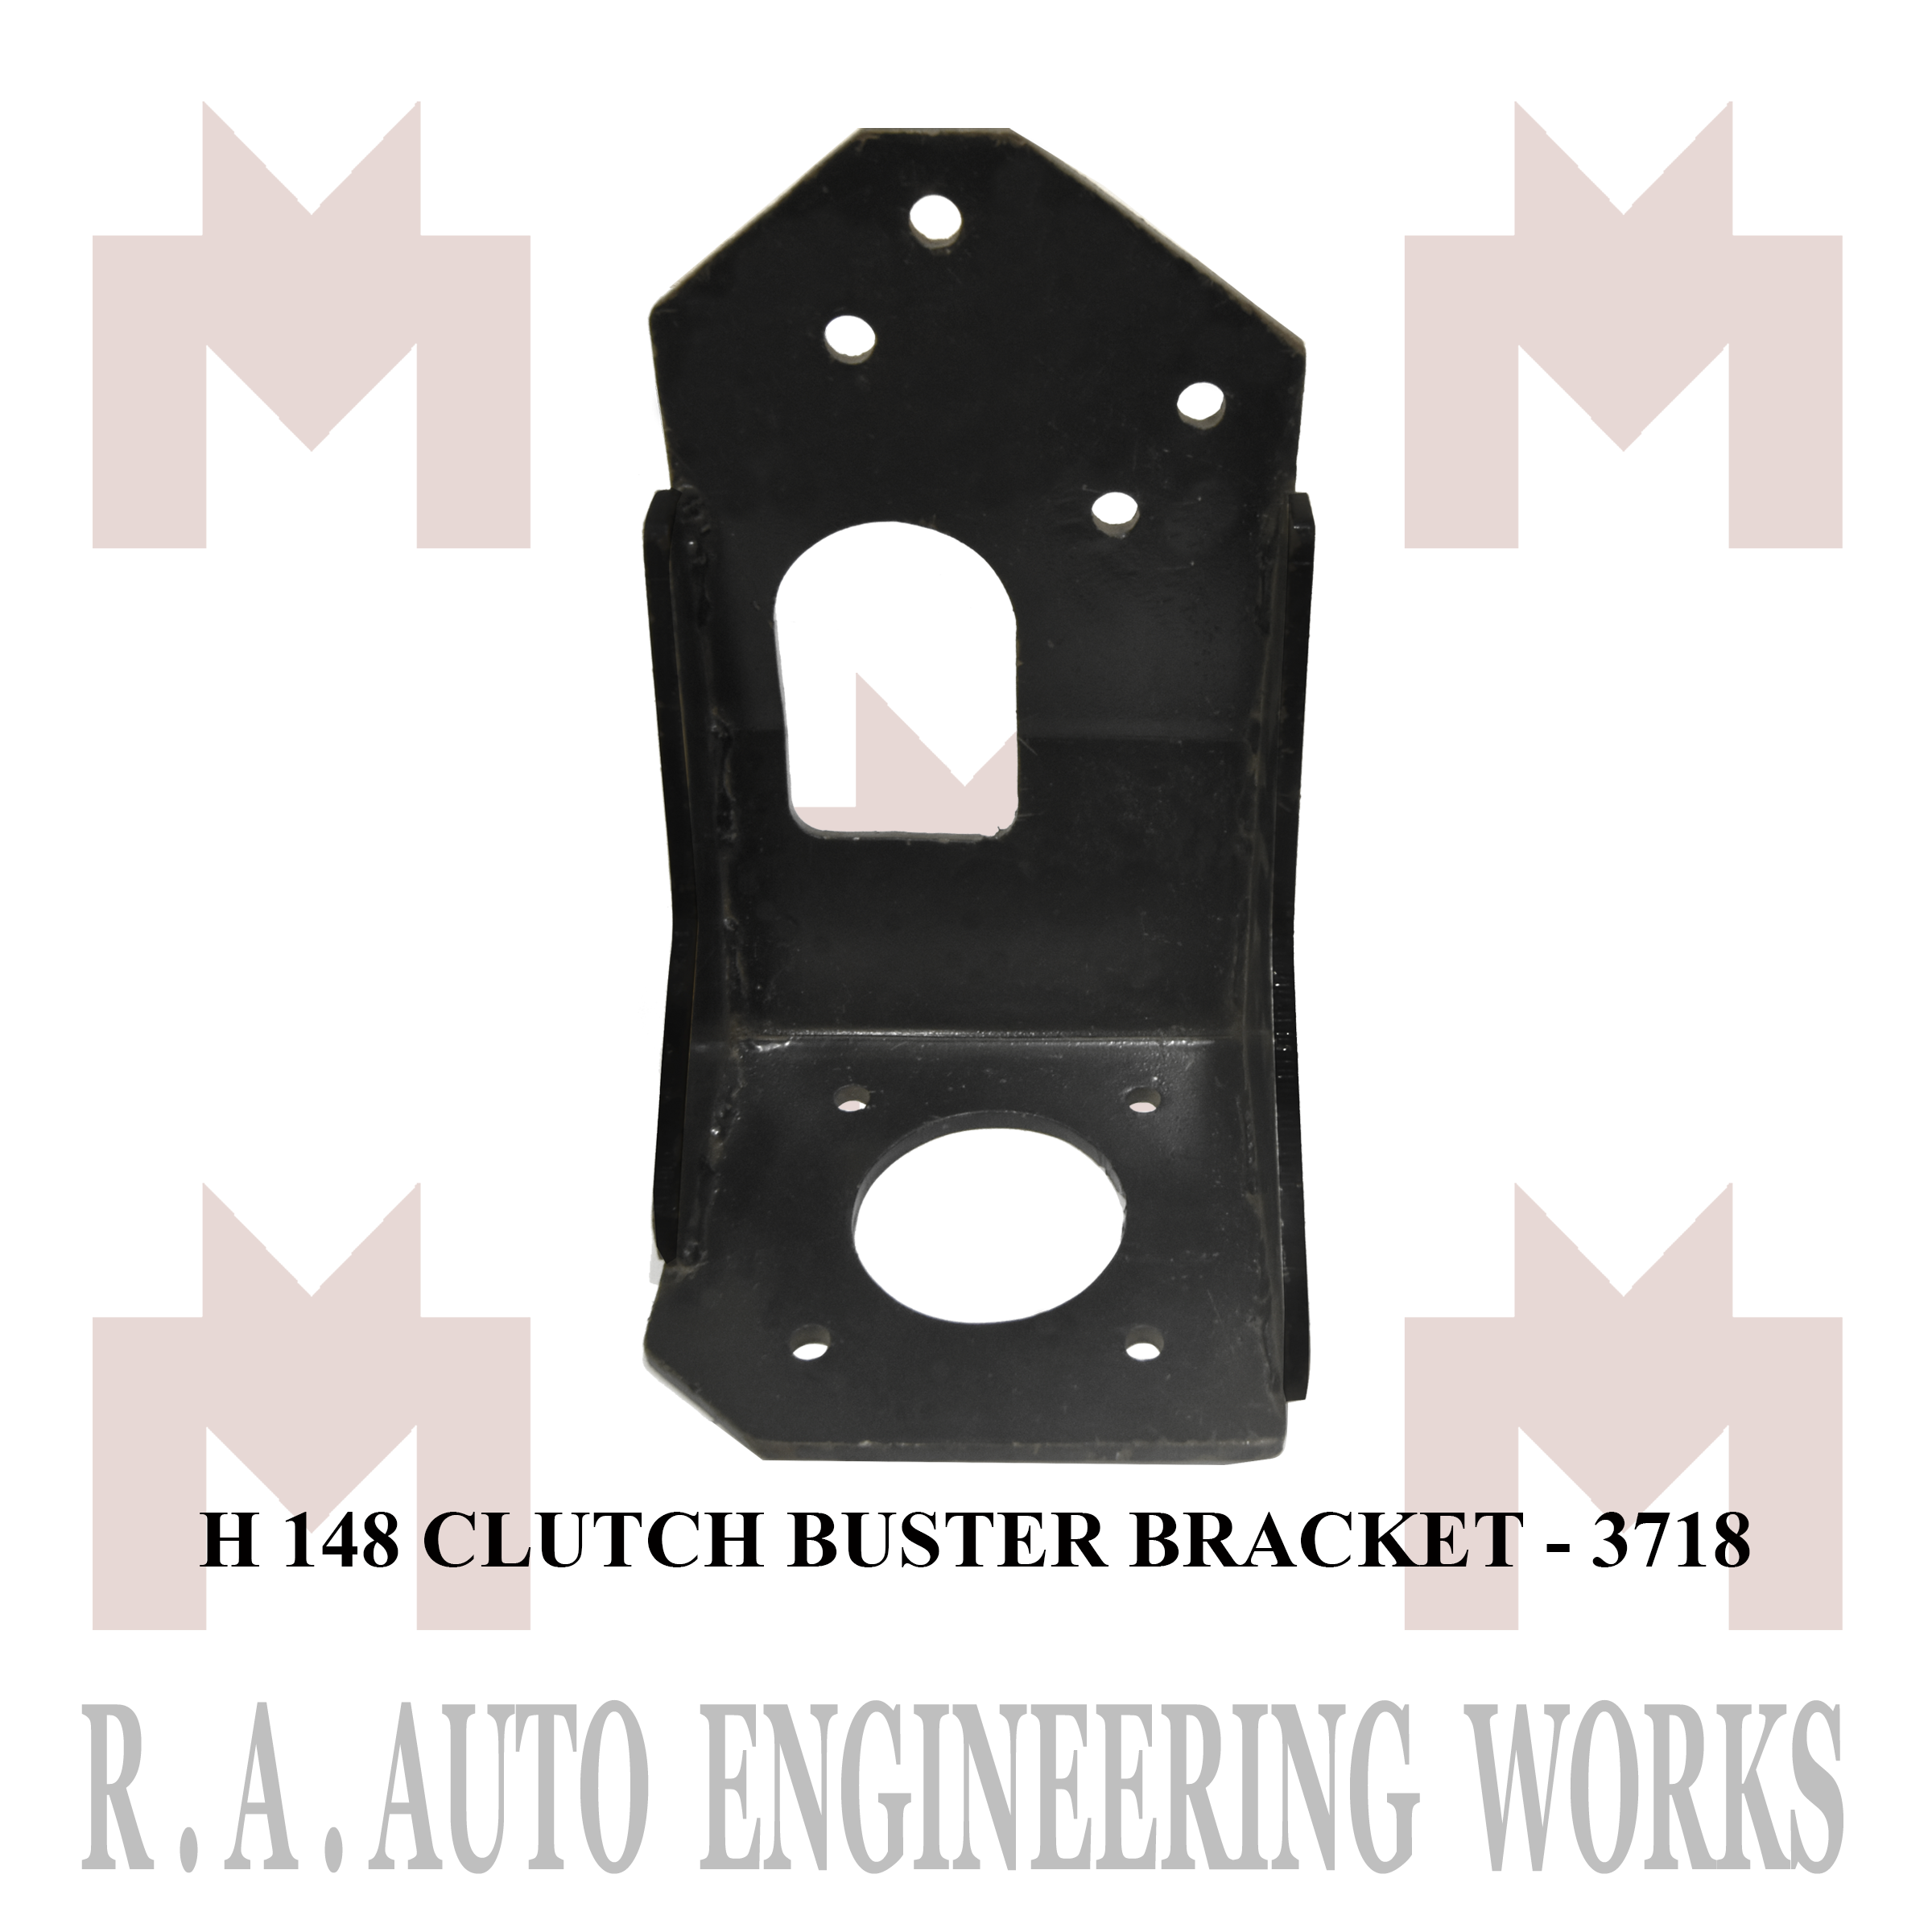 H 148 CLUTCH BUSTER BRACKET - 3718